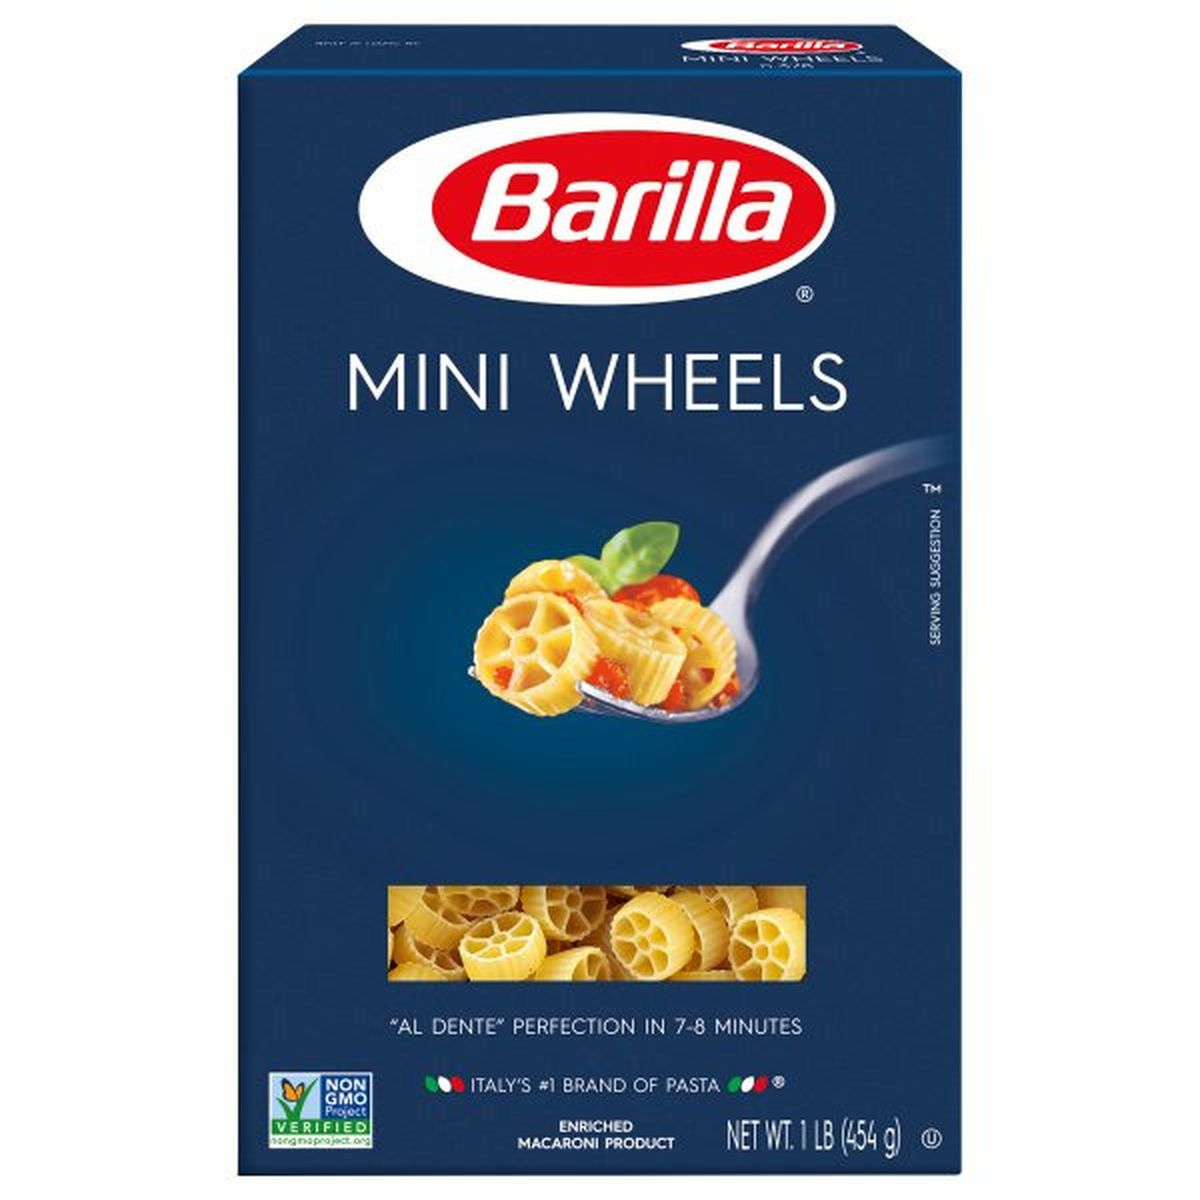 Calories in Barillas Wheels, Mini